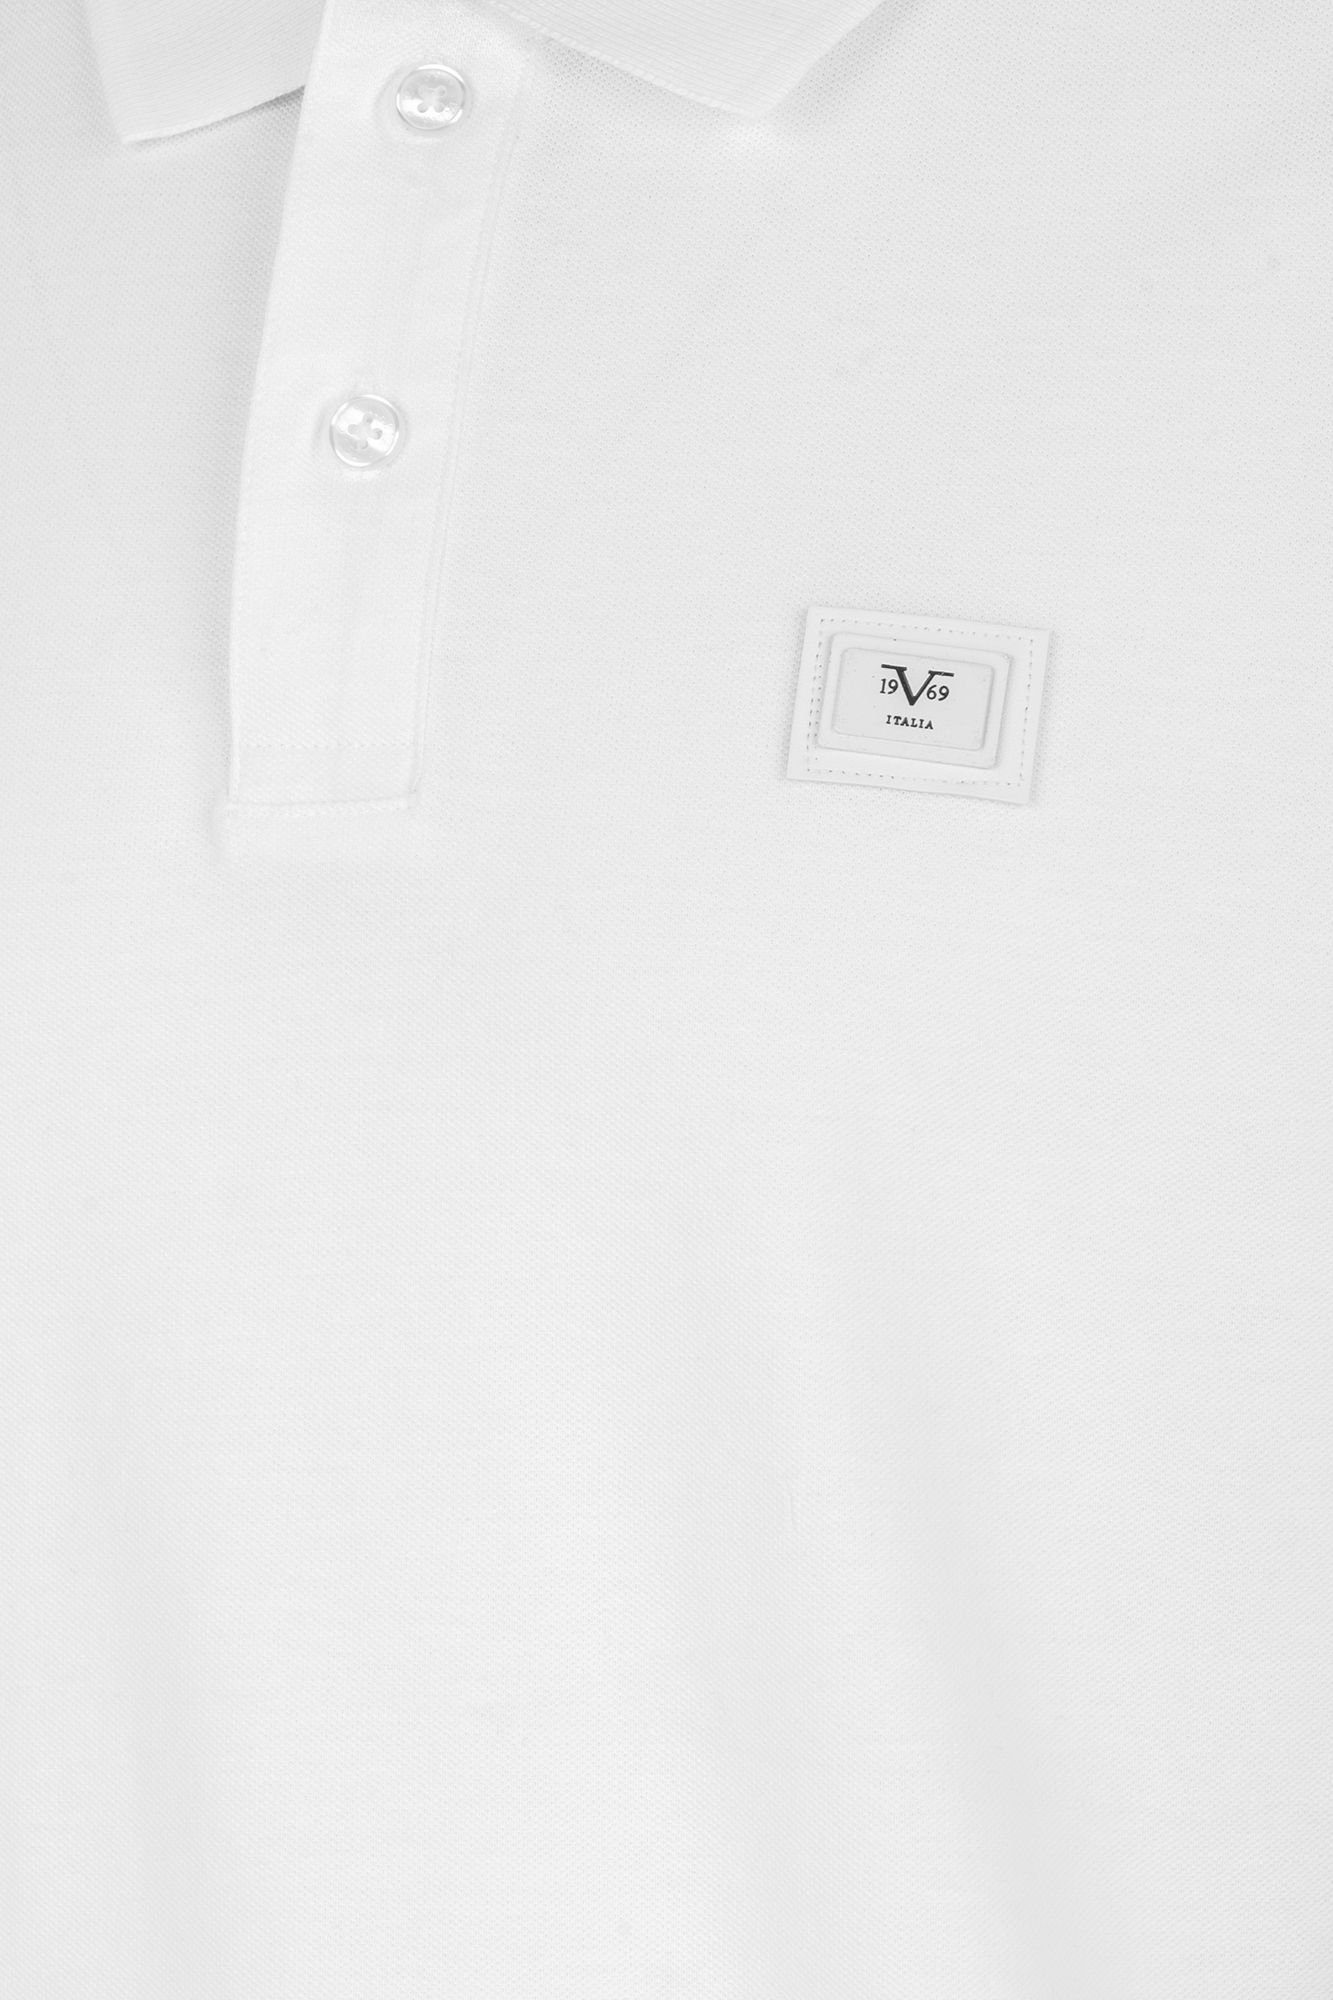 19V69 Italia Paul by Versace Poloshirt